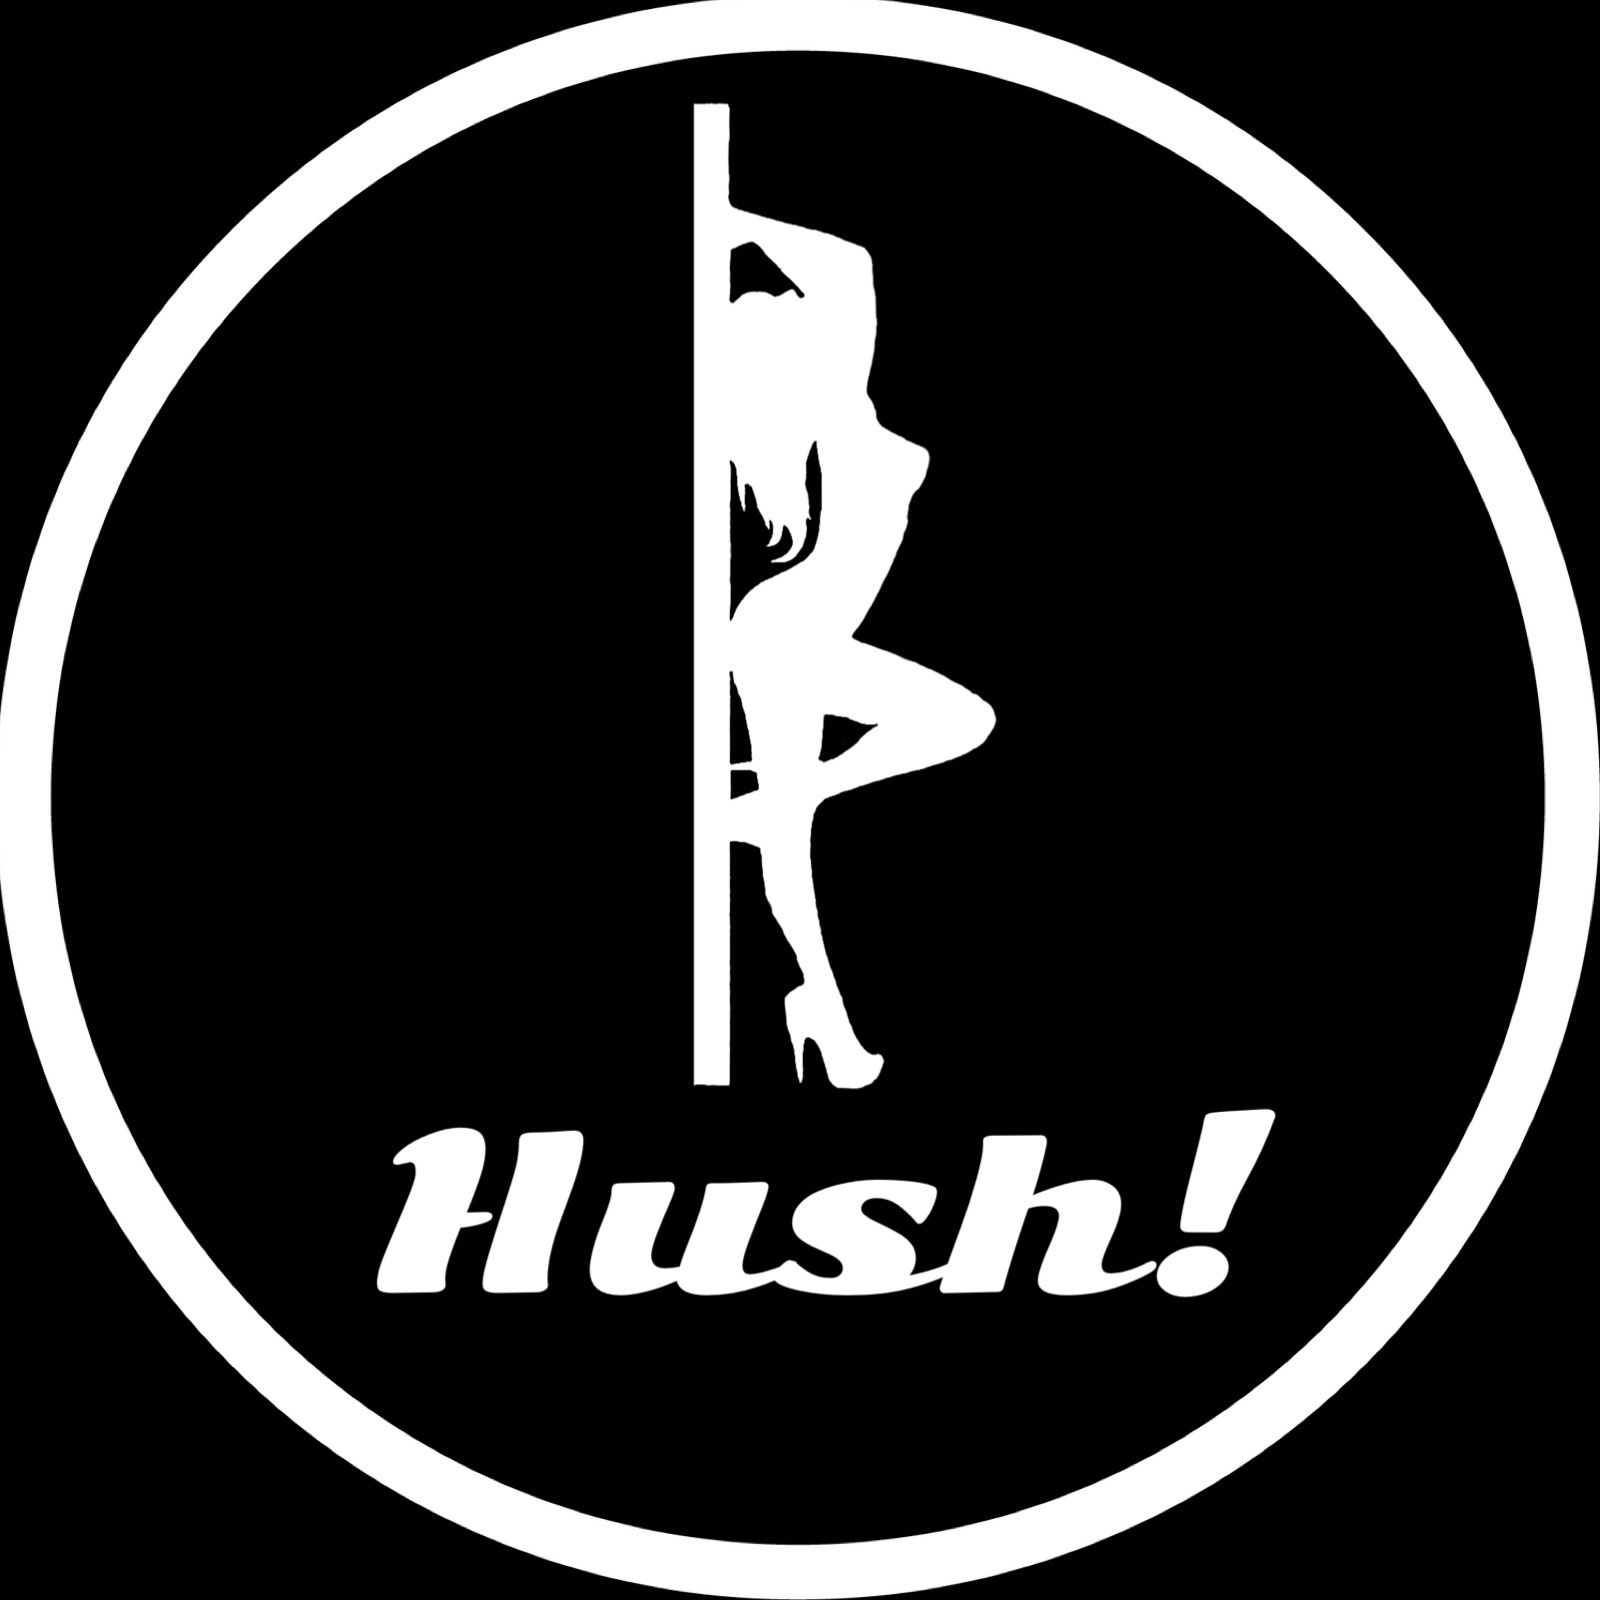 Hush! - Hush! Vol. 63- Meet Dewayne and Sweets!!!